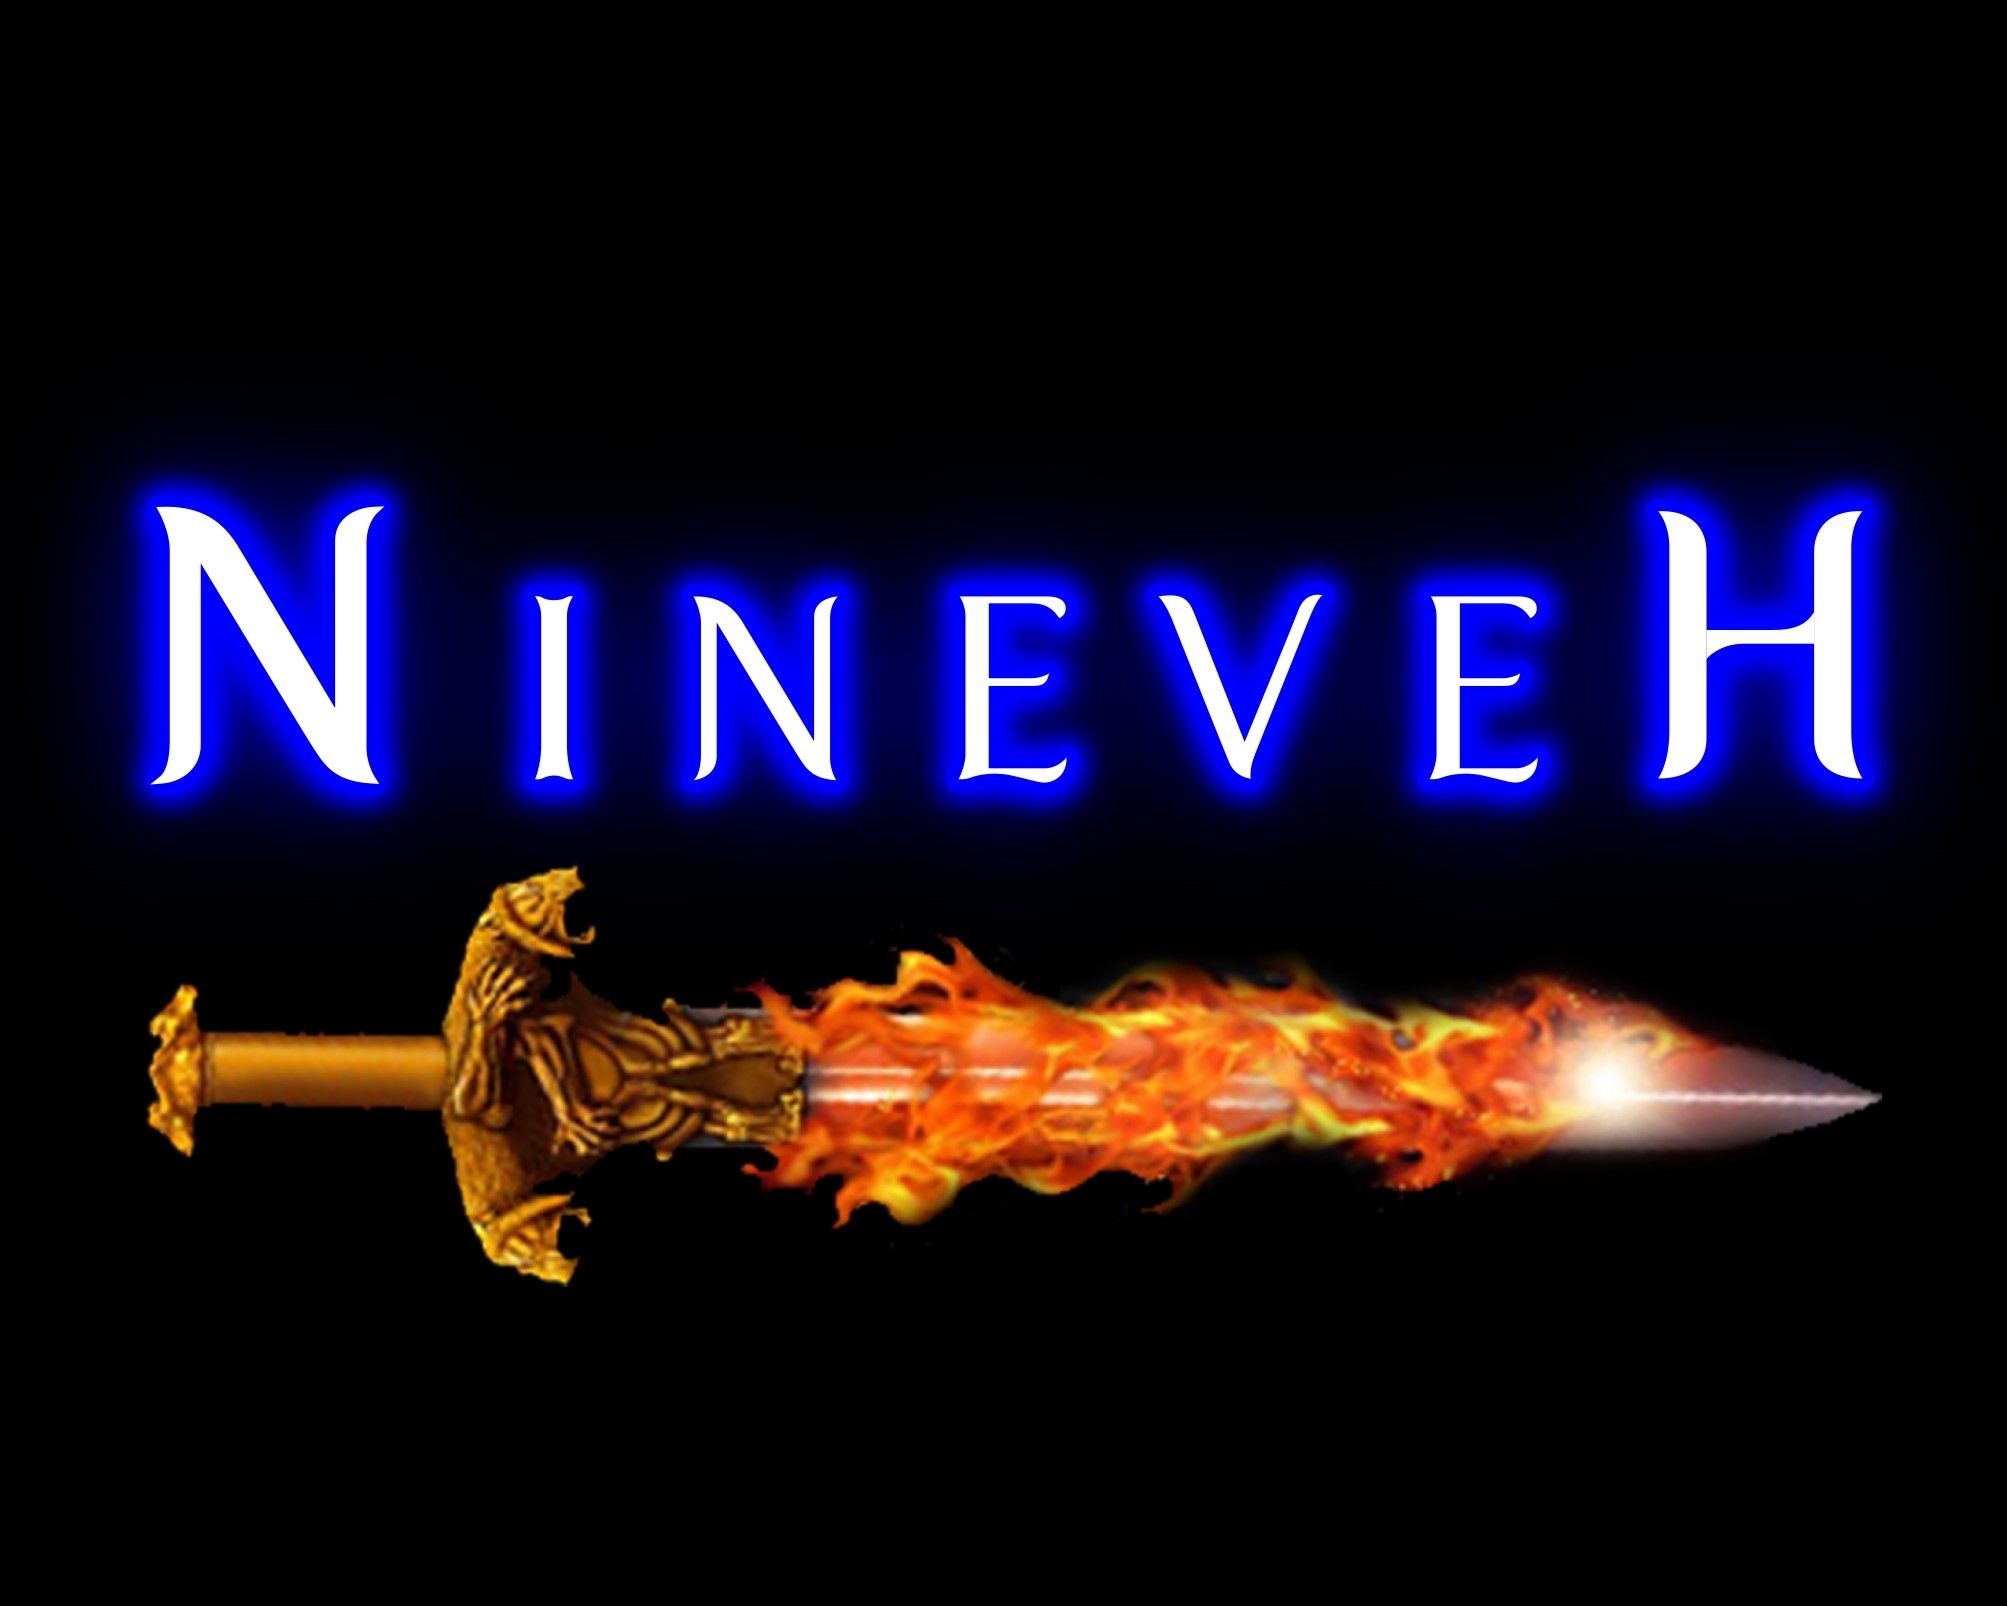 Nineveh Card Deck System